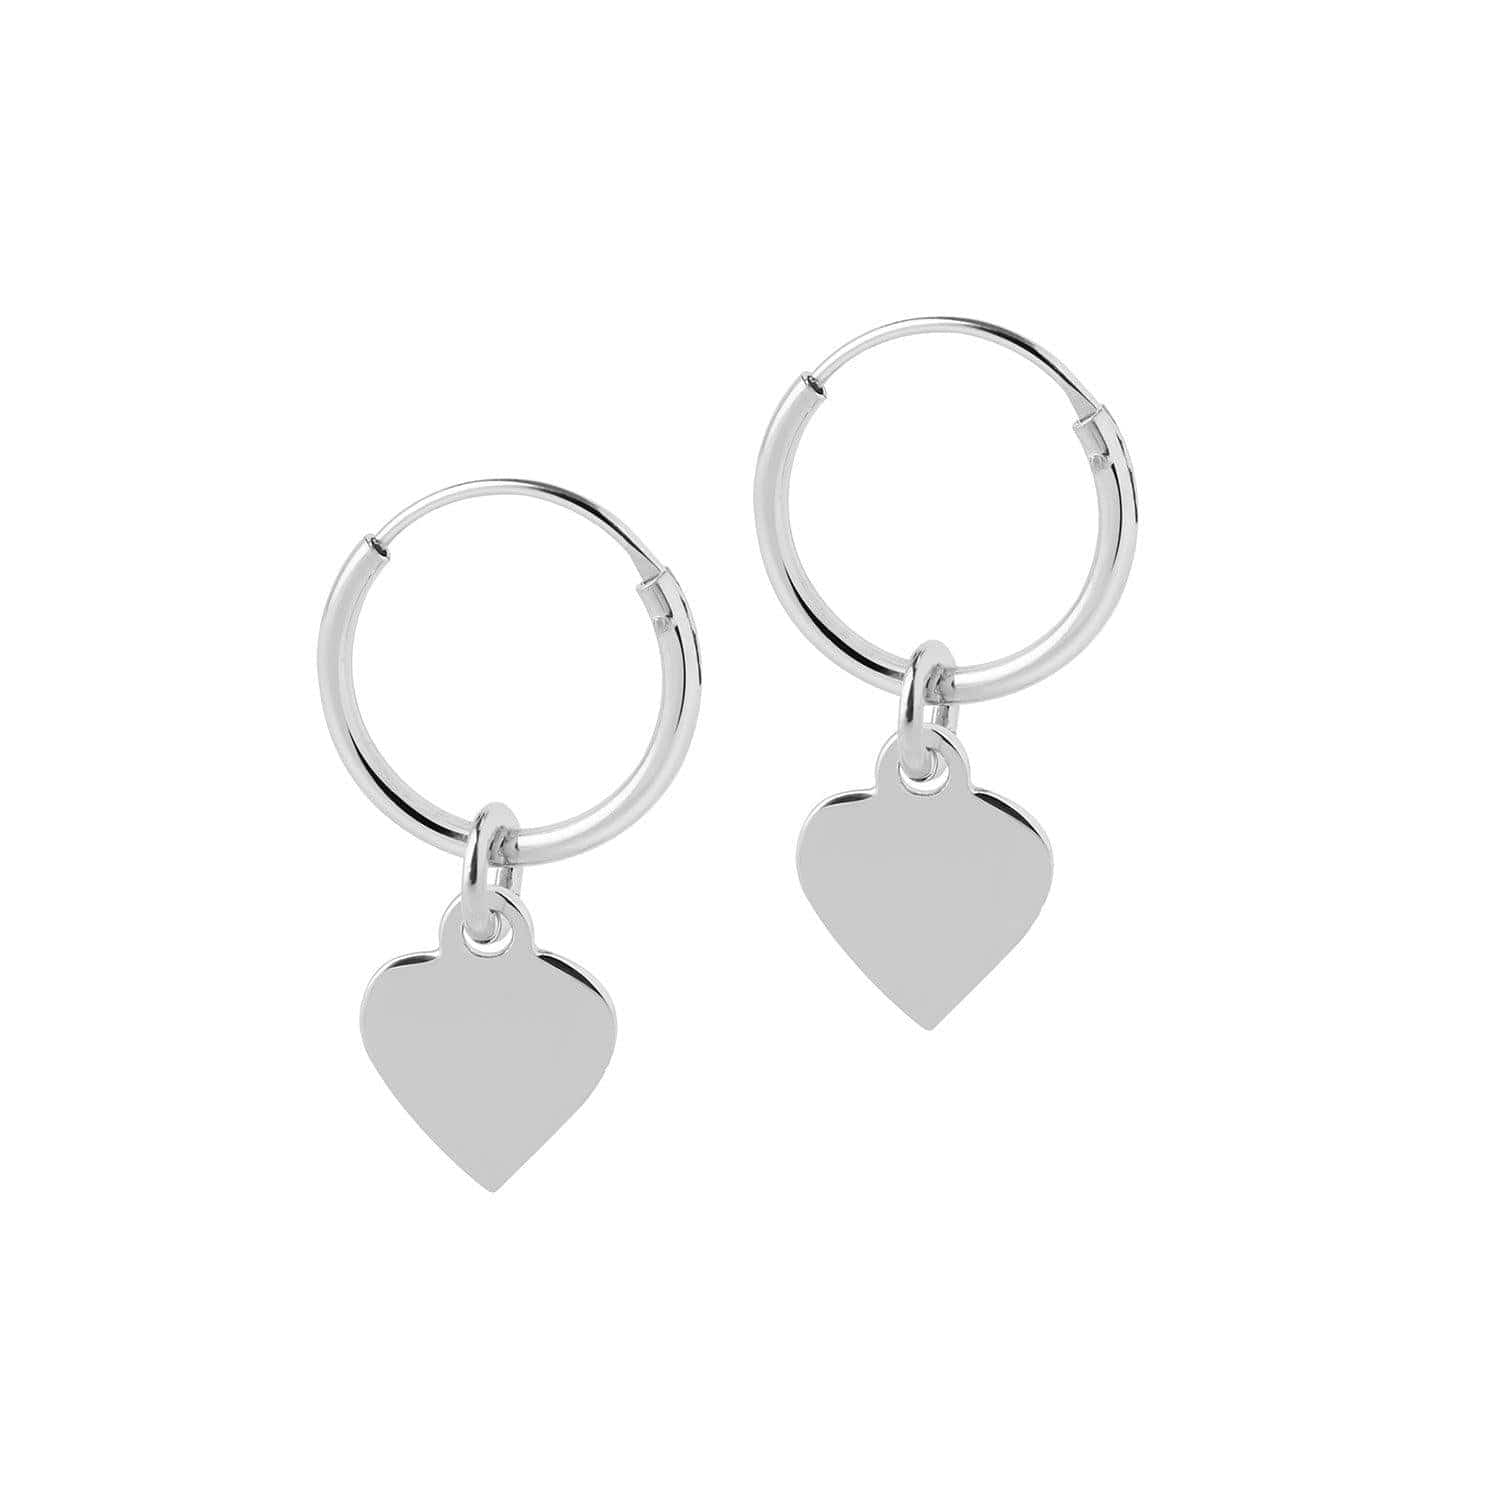 Hoop Earrings with Pendant Heart Silver 12 MM